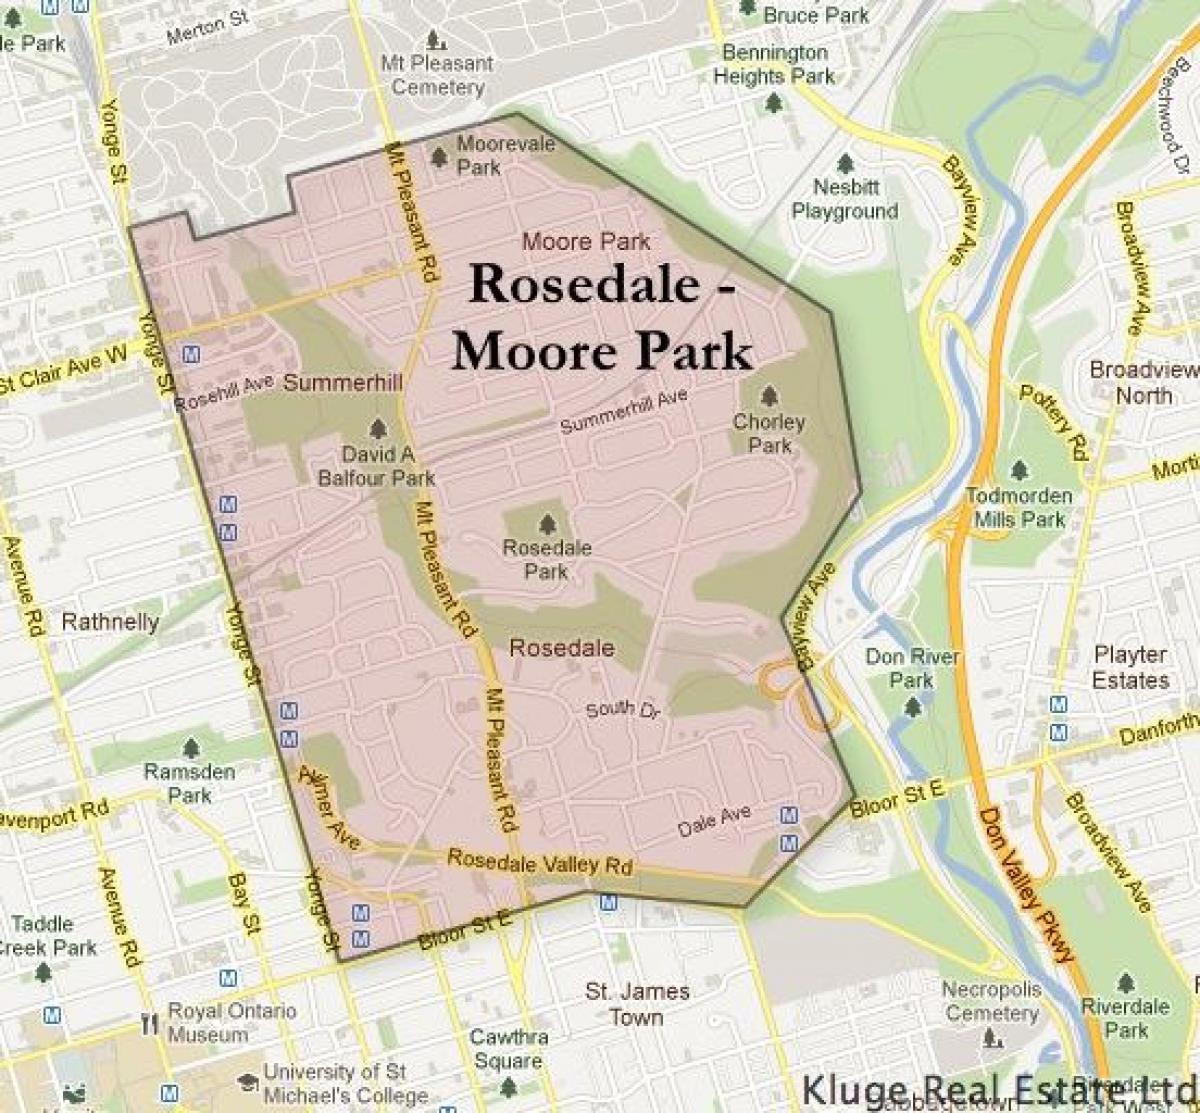 Kort over Rosedale Moore Park og Toronto